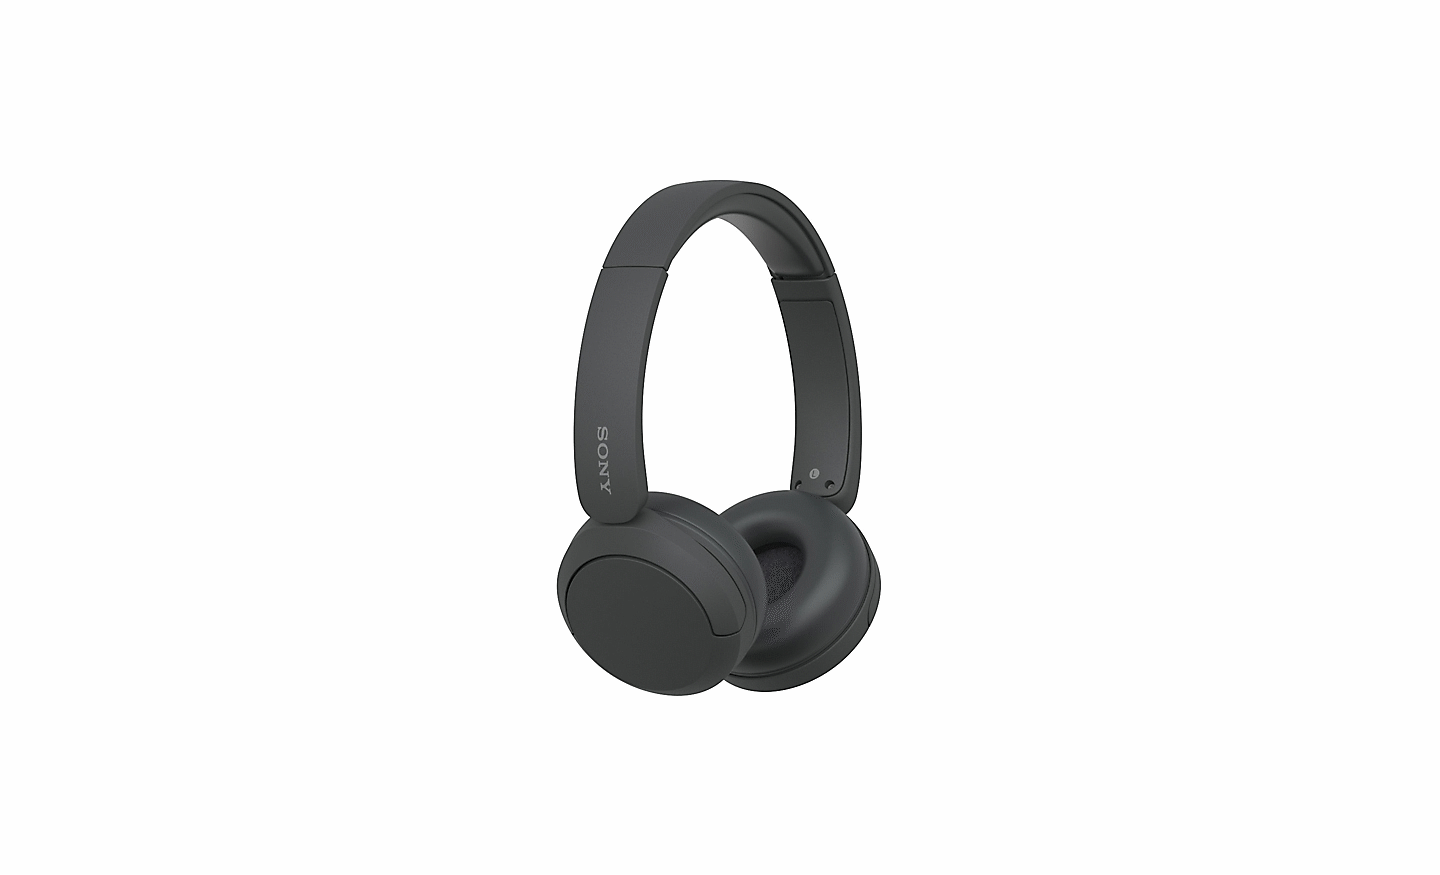 Slika črnih slušalk Sony WH-CH520 na belem ozadju